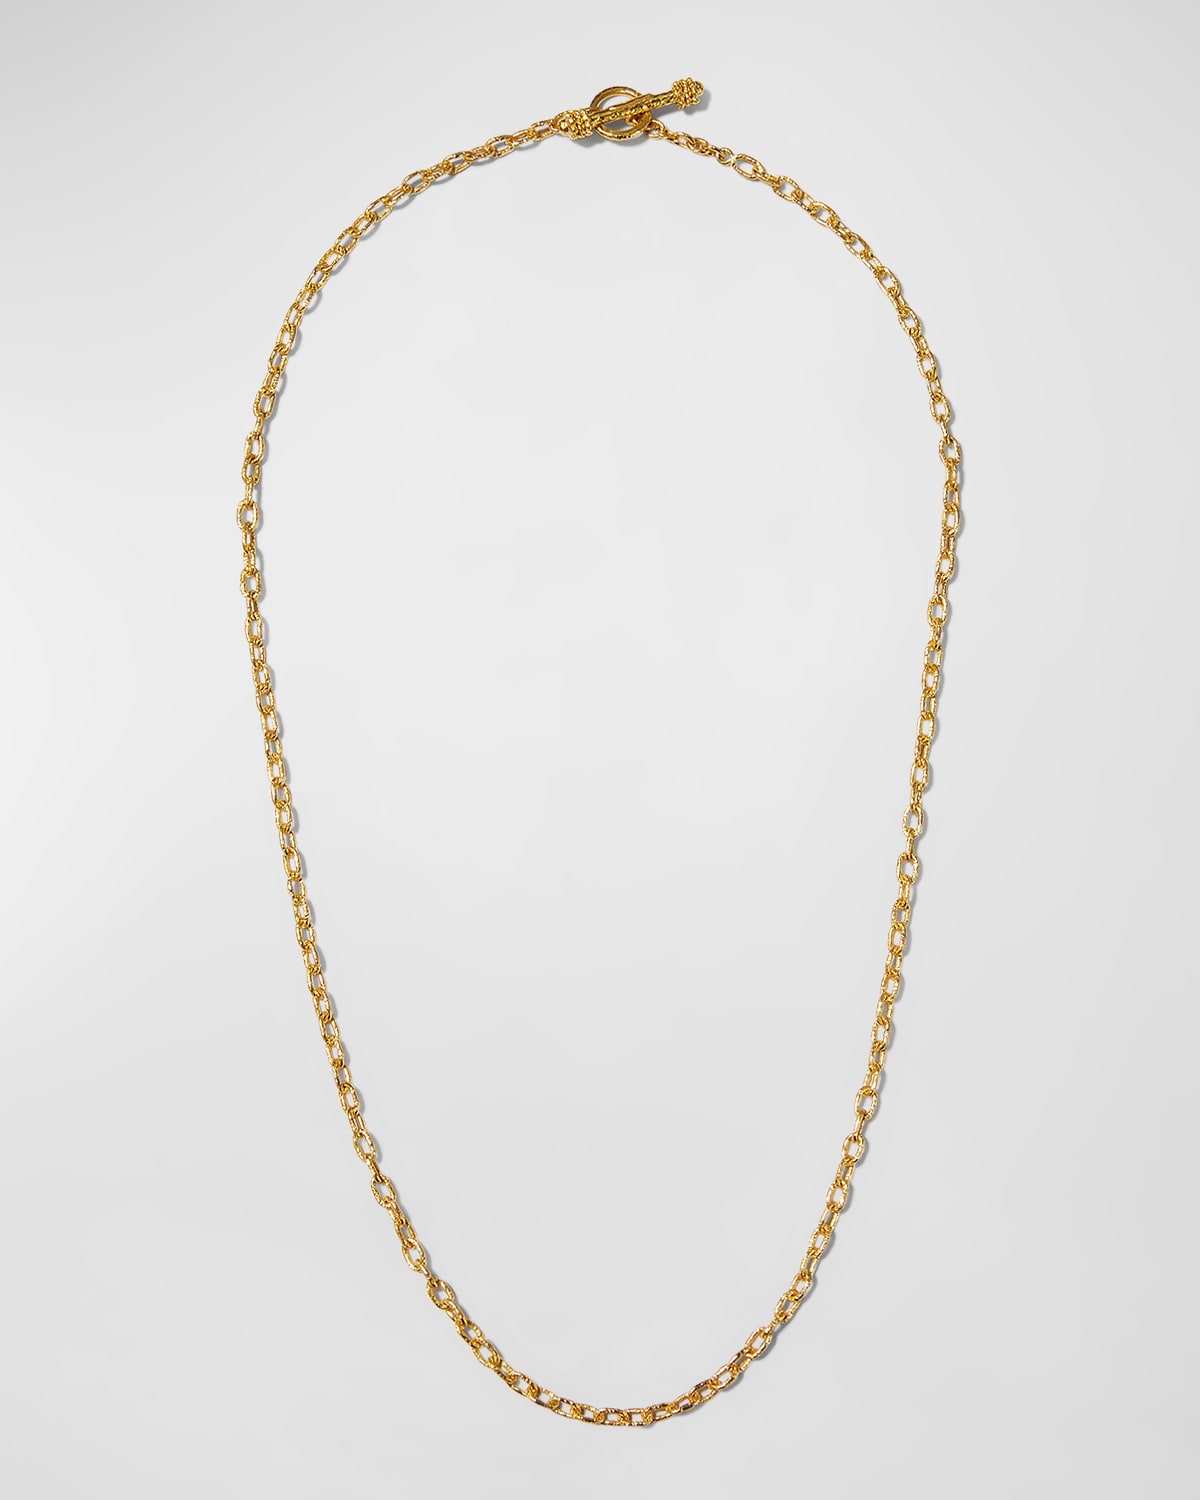 Elizabeth Locke Handmade Gold Chain Necklace, 21"L